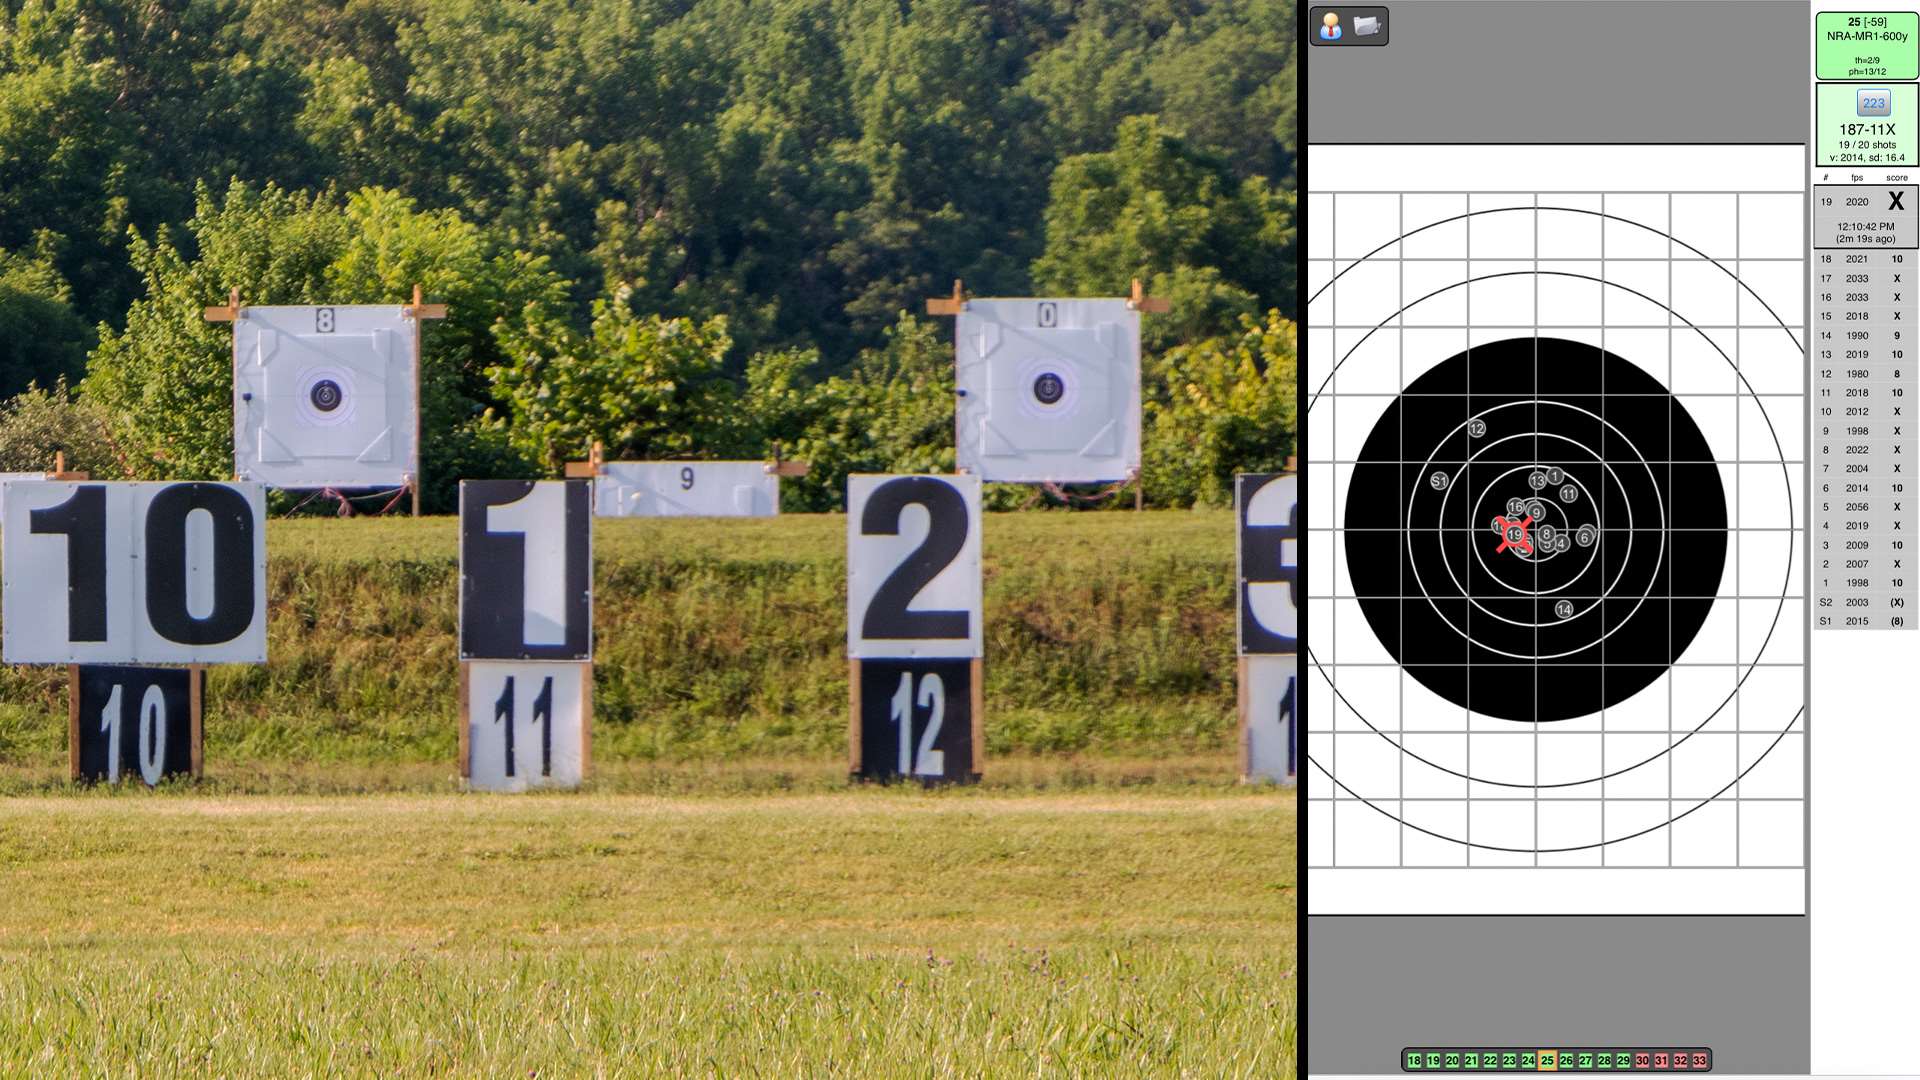 E-target and shot display